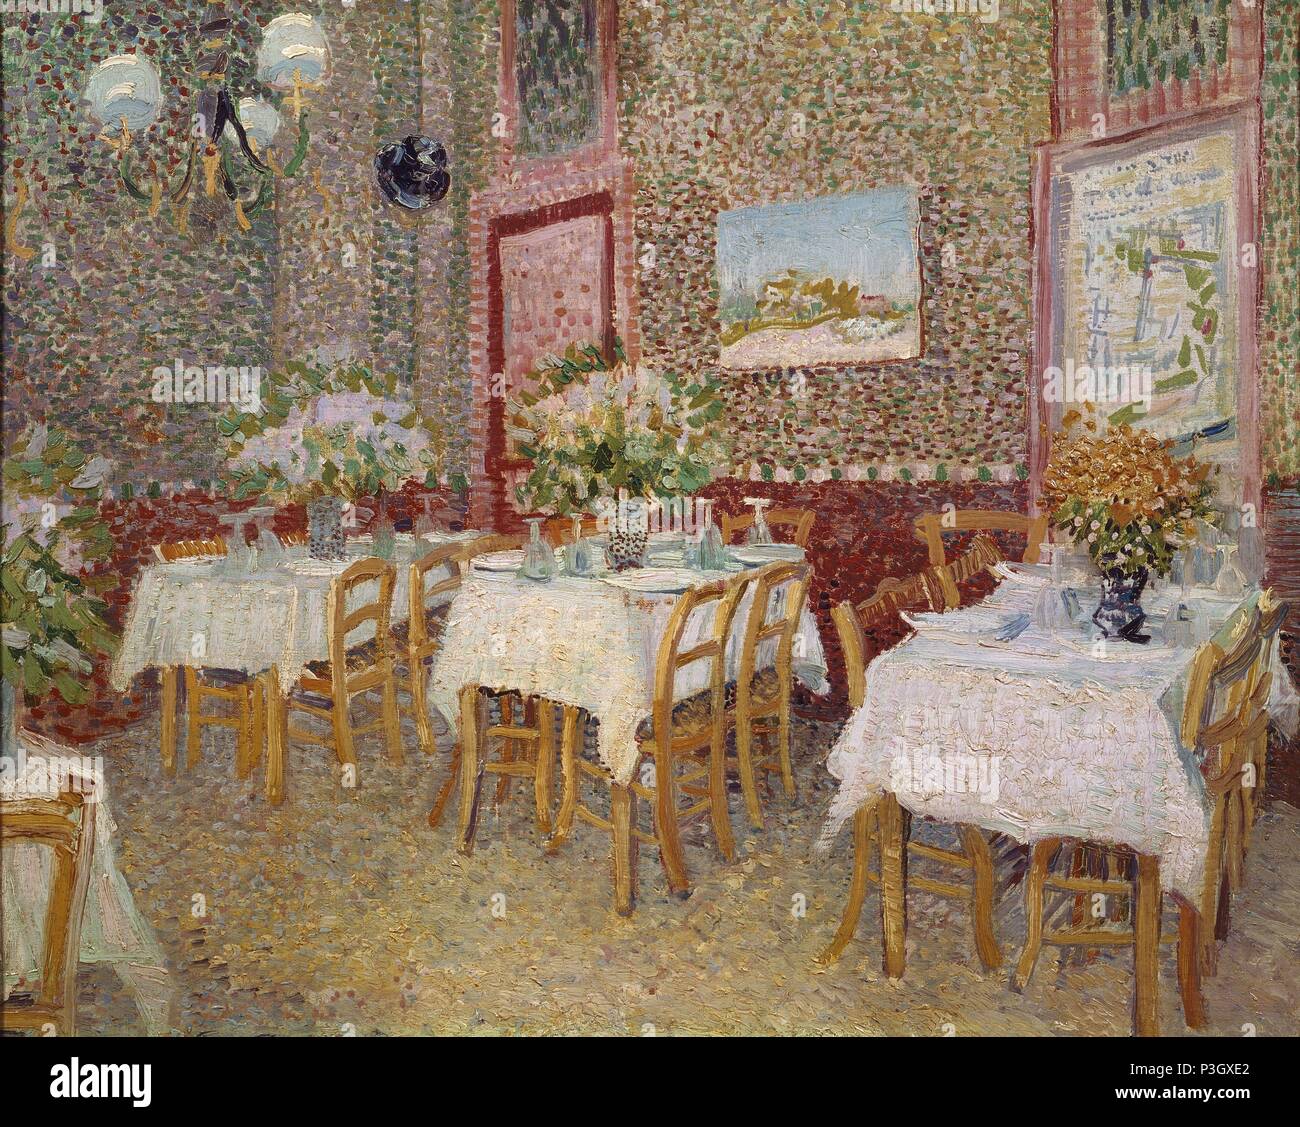 Dutch school. Interior of a Restaurant. 1887. Oil on canvas (45 x 56 cm). Otterlo, Kröller Müller museum. Author: Vincent van Gogh (1853-1890). Location: MUSEO KROLLER-MULLER, OTTERLO, HOLANDA. Stock Photo